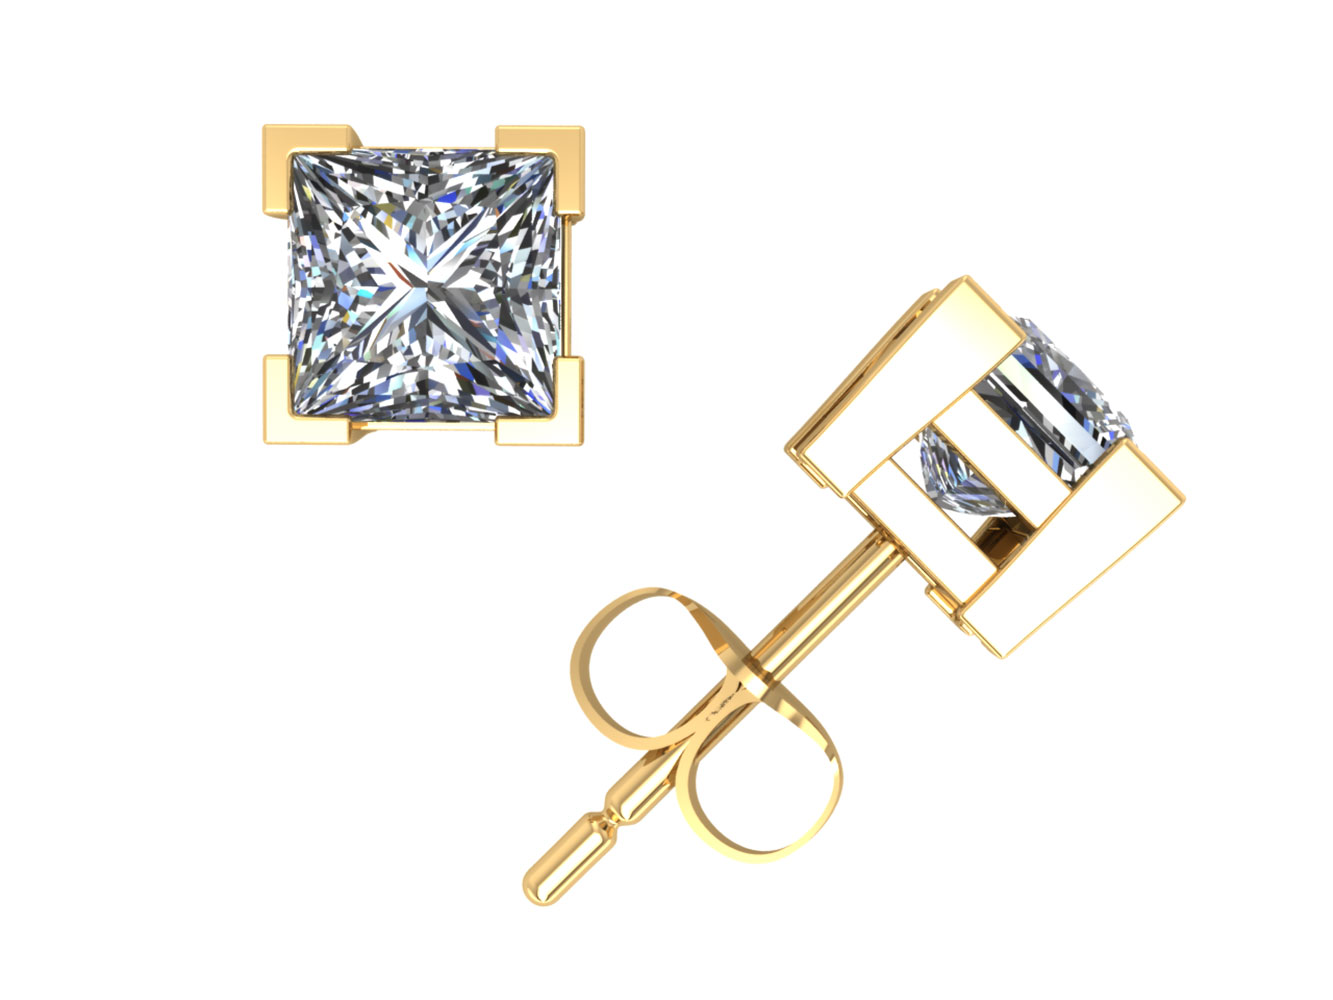 Jewel We Sell 1.25Ct Princess Cut Diamond Stud Earrings 14k White or Yellow Gold V-Prong Setting F VS2